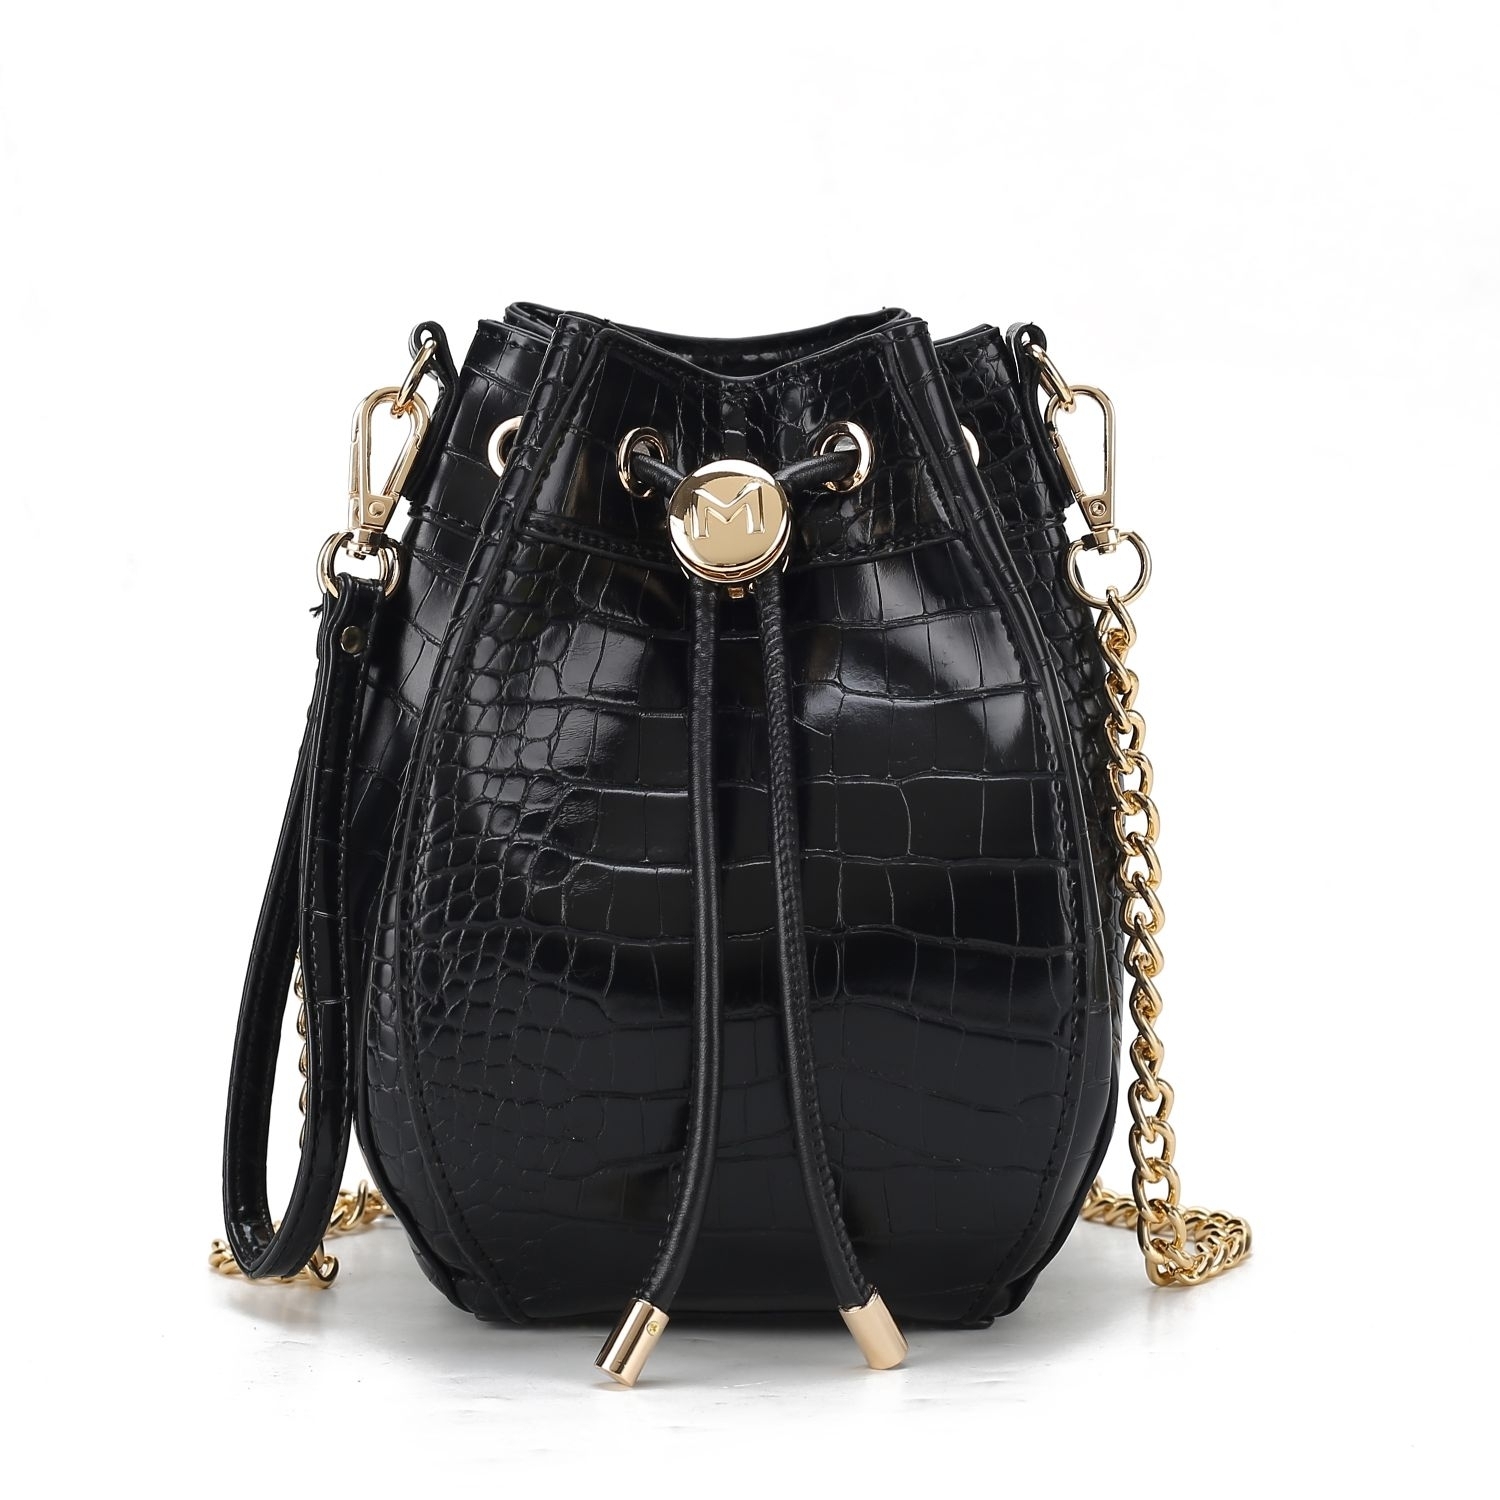 MKF Collection Cassidy Crocodile Embossed Vegan Leather Women's Hobo Bucket Bag By Mia K - Royal Blue